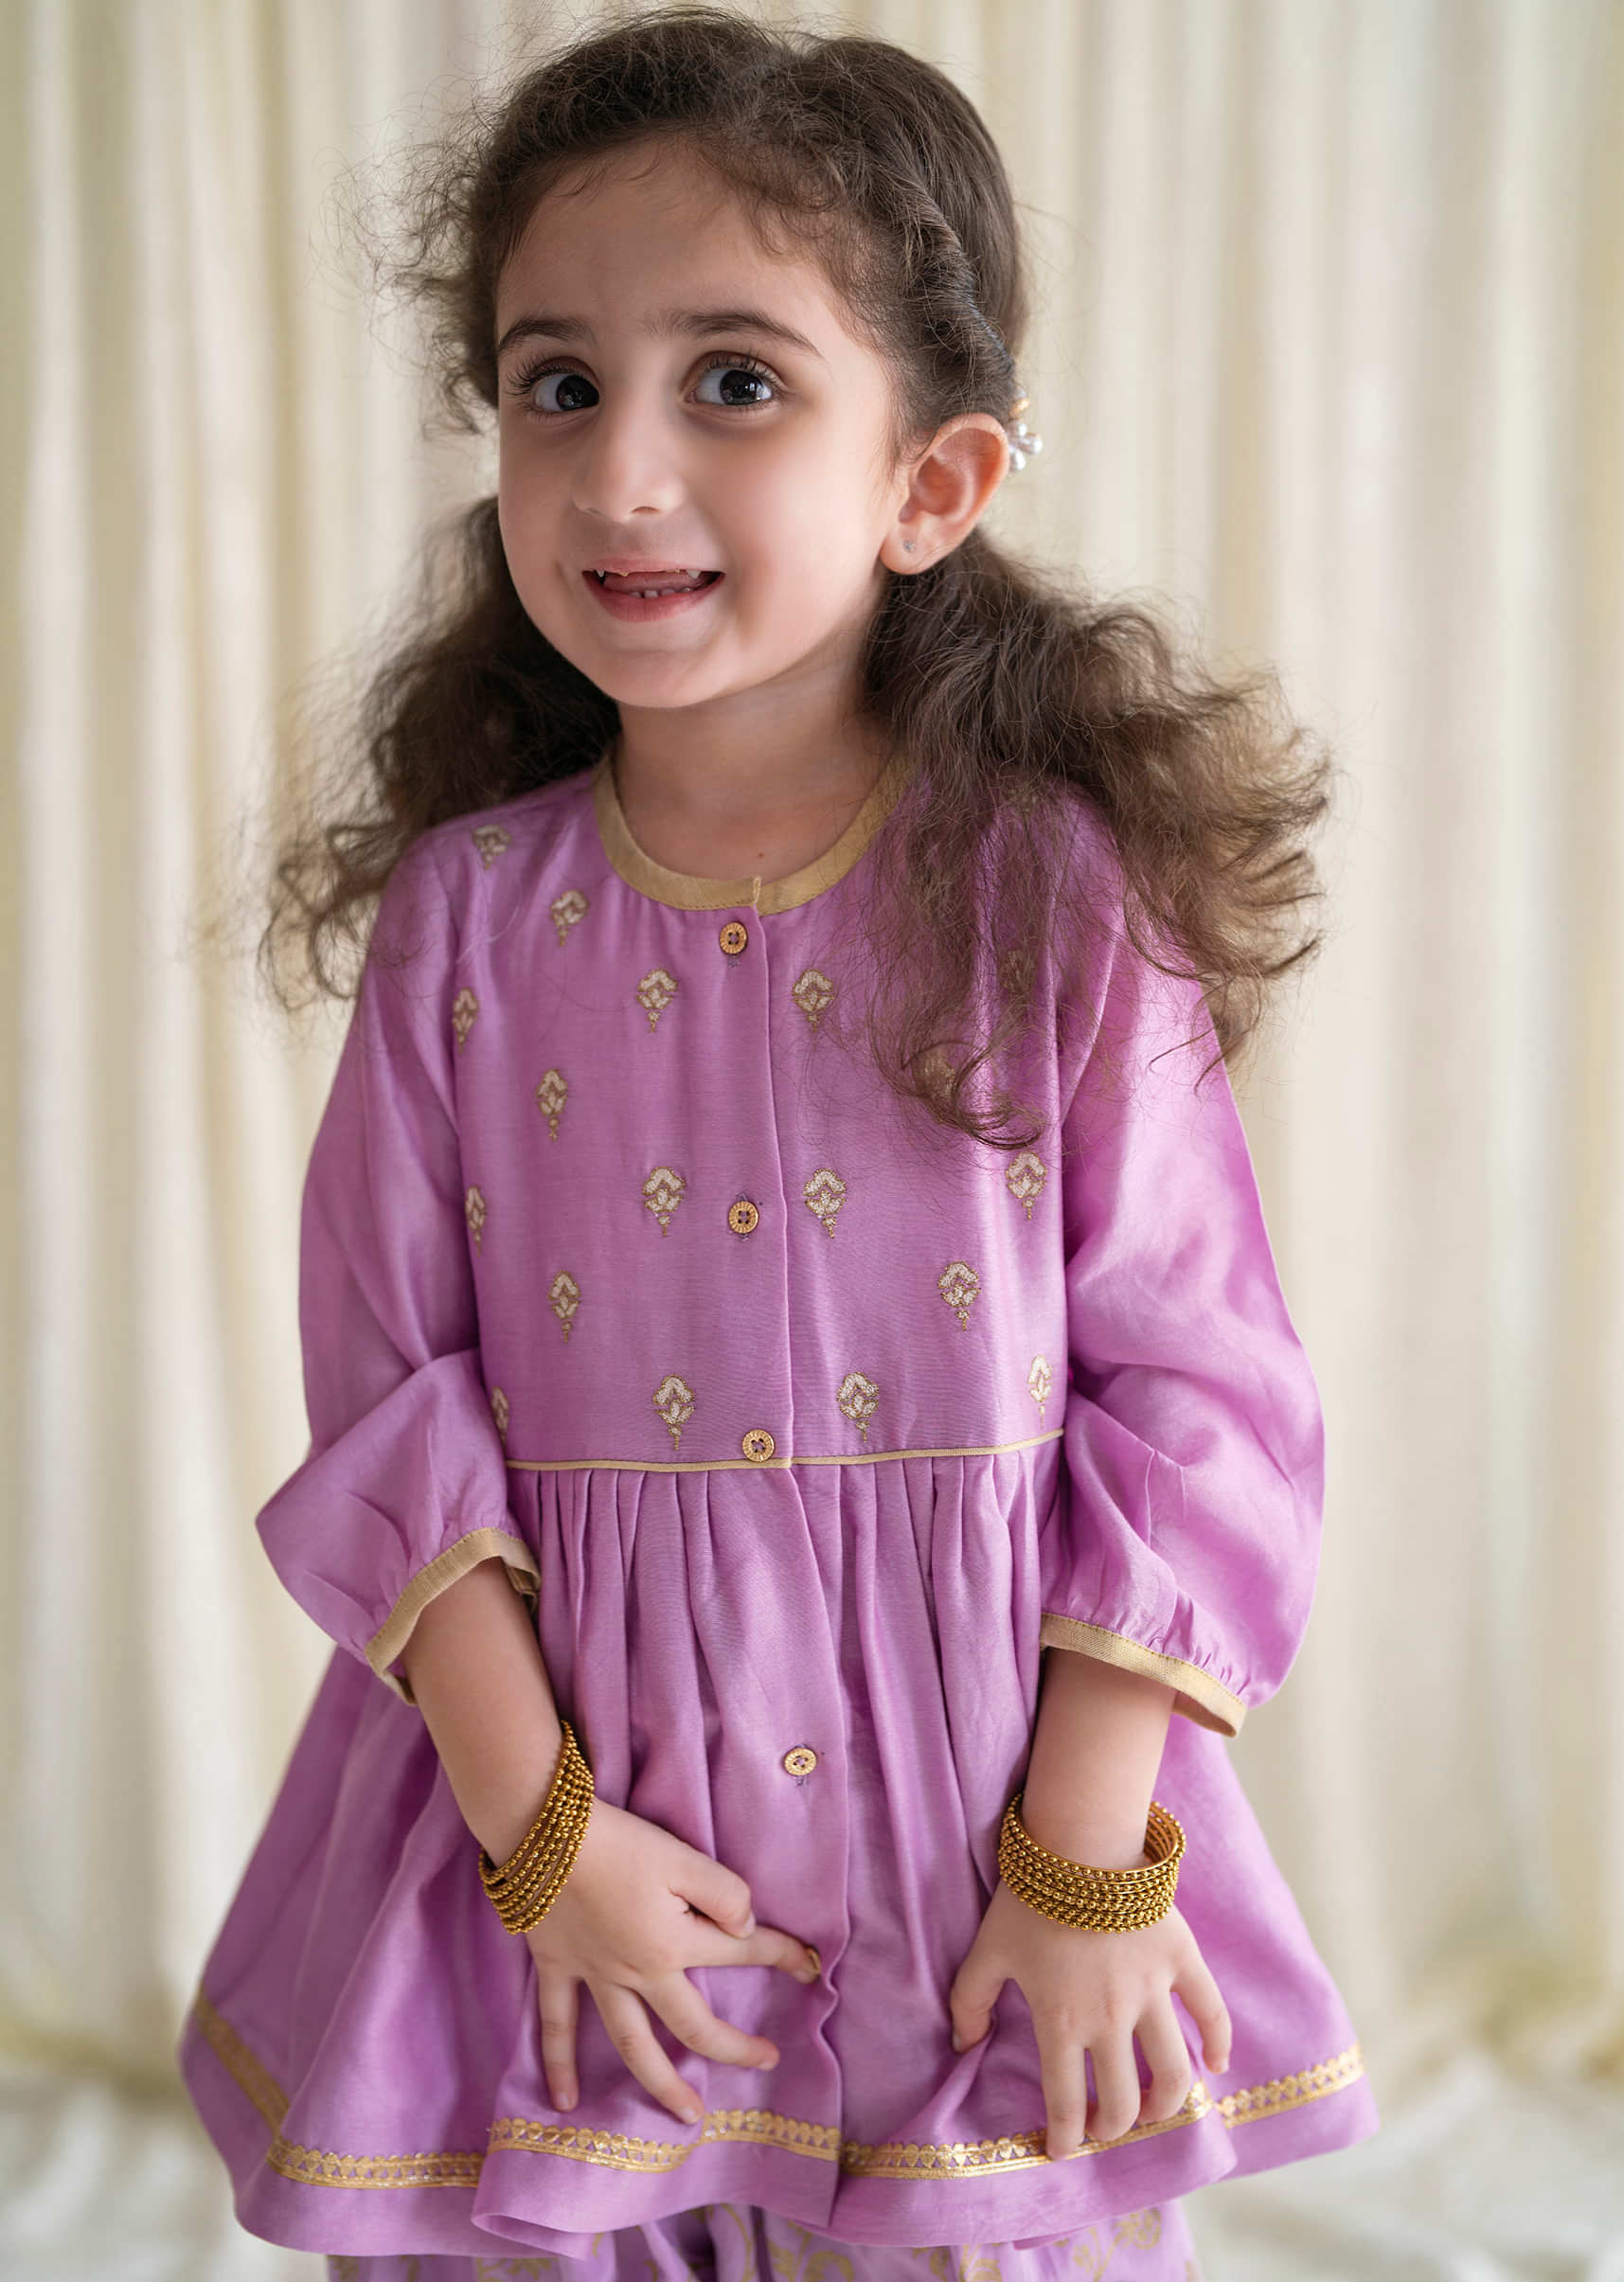 Kalki Girls Combo Of Lilac Purple Embroidered Angrakha Set And Gold Printed Bow Hairclip